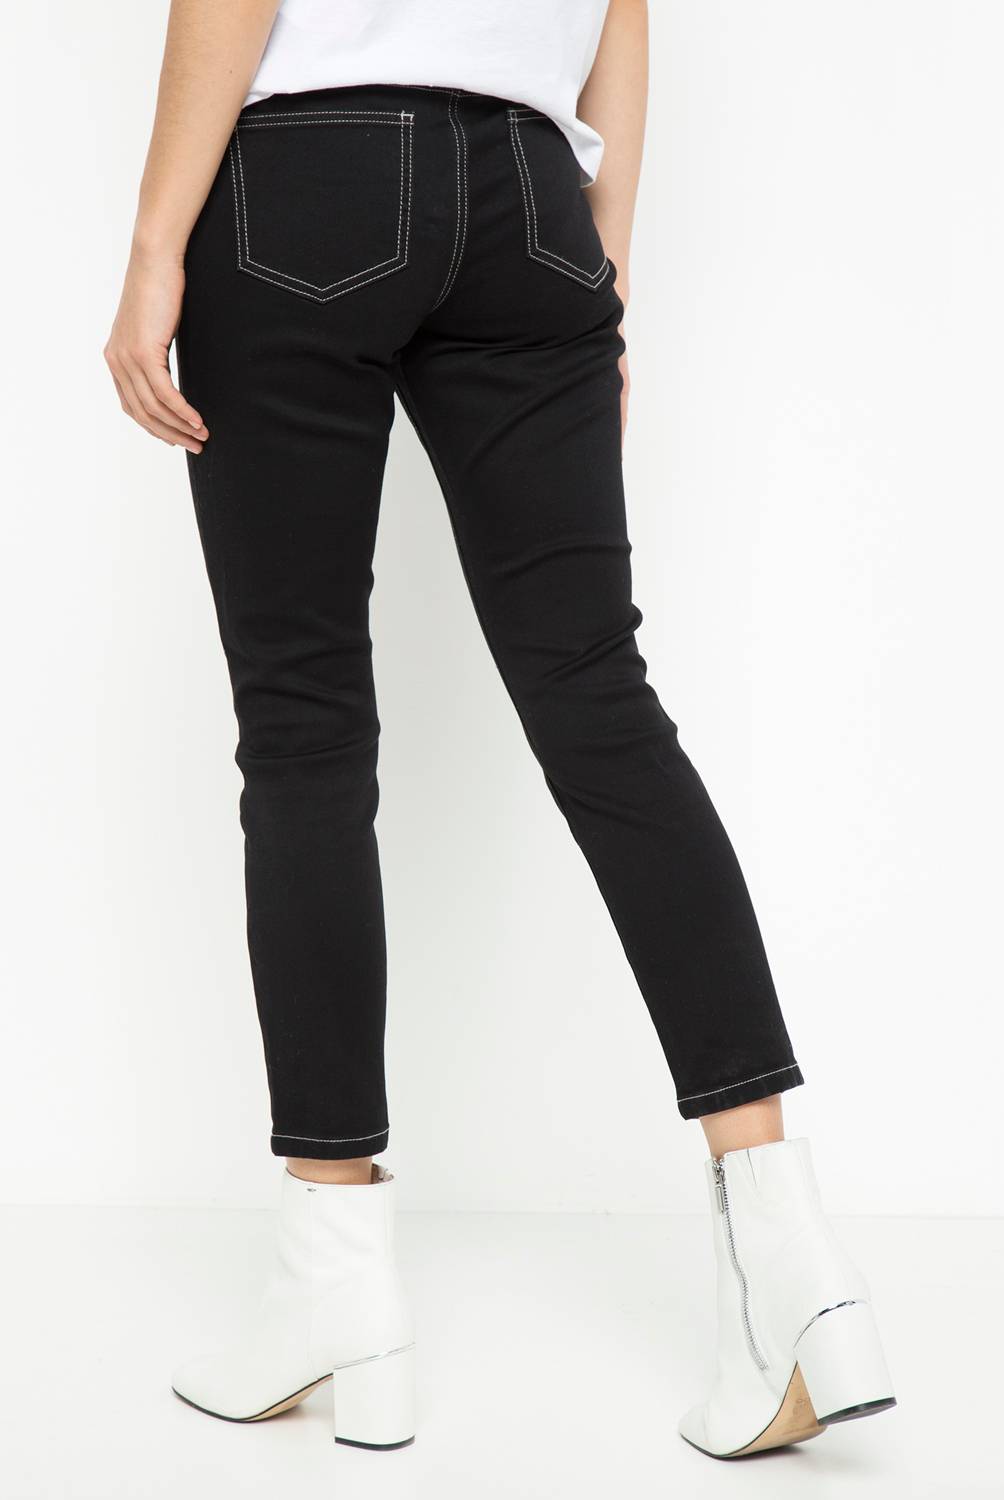 Only - Jeans de Algodón Skinny Fit Mujer